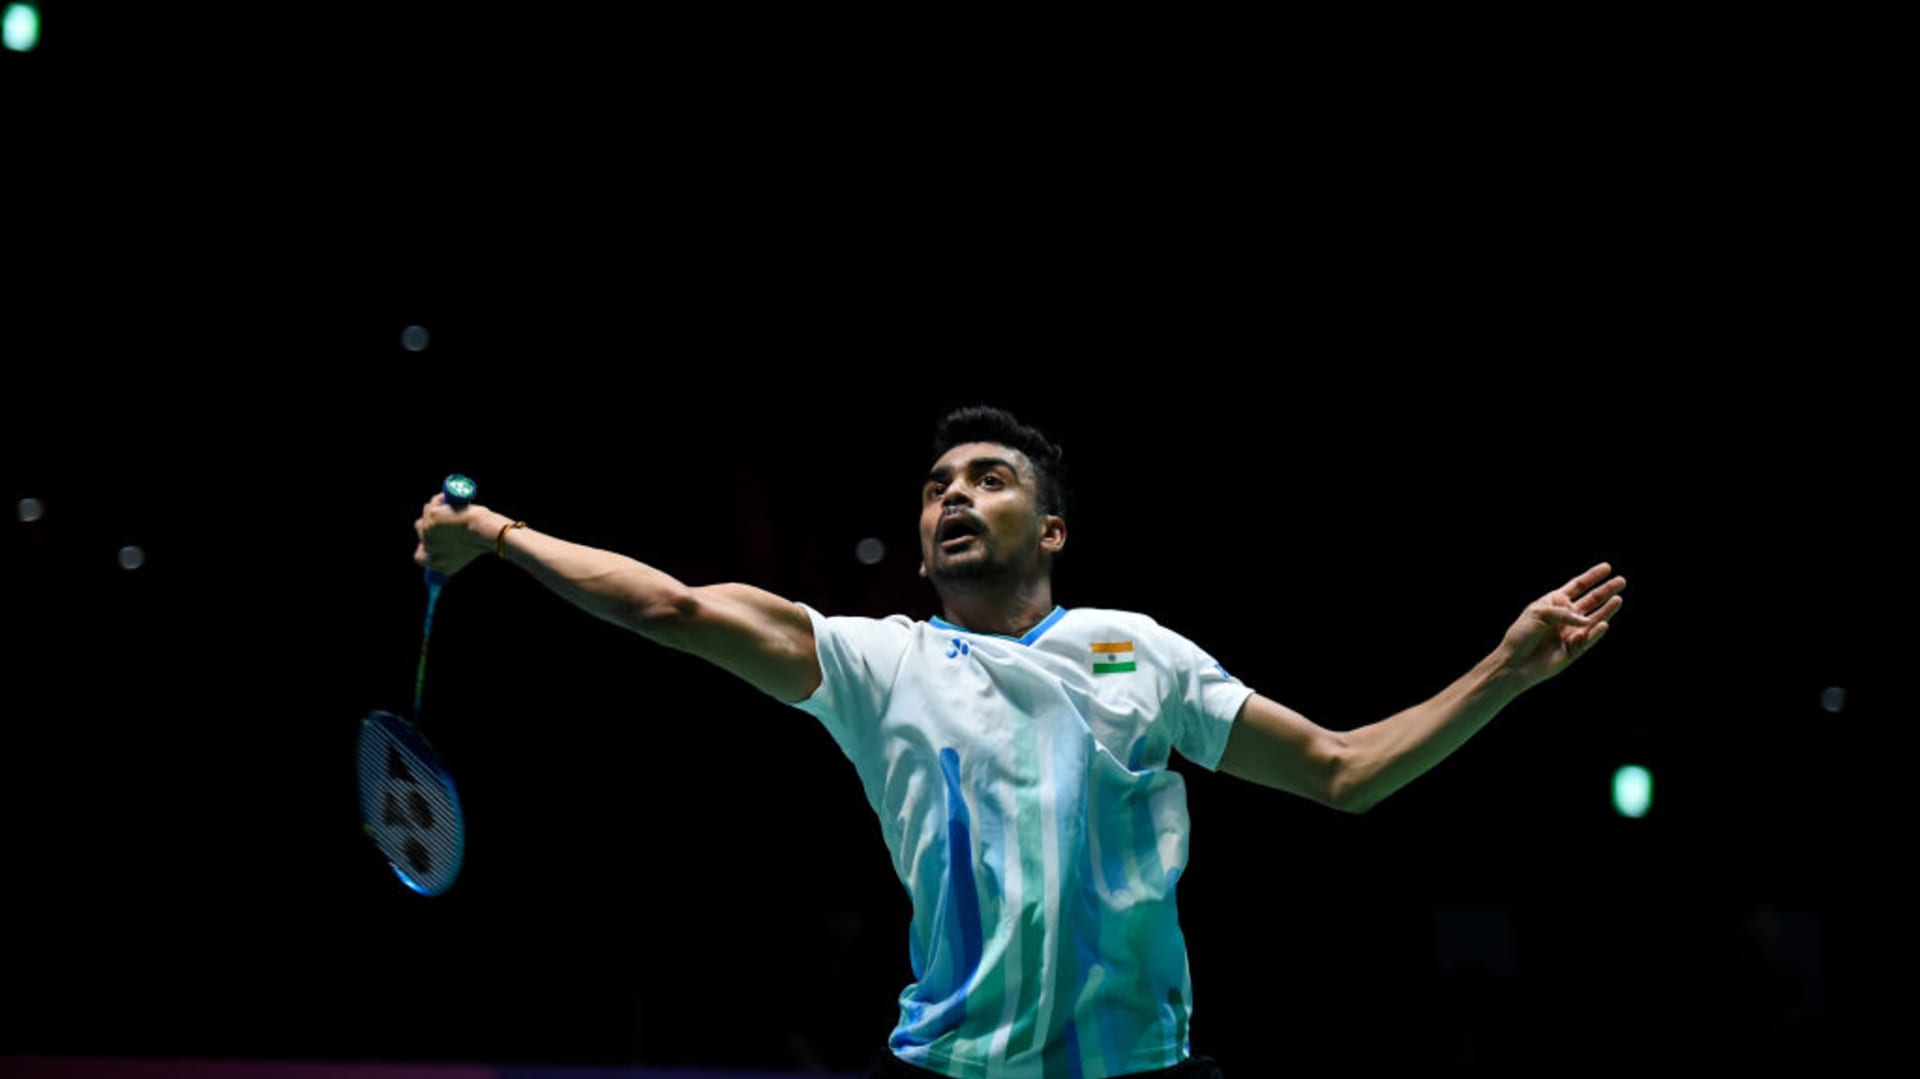 Australian Open 2022 badminton Watch live streaming in India